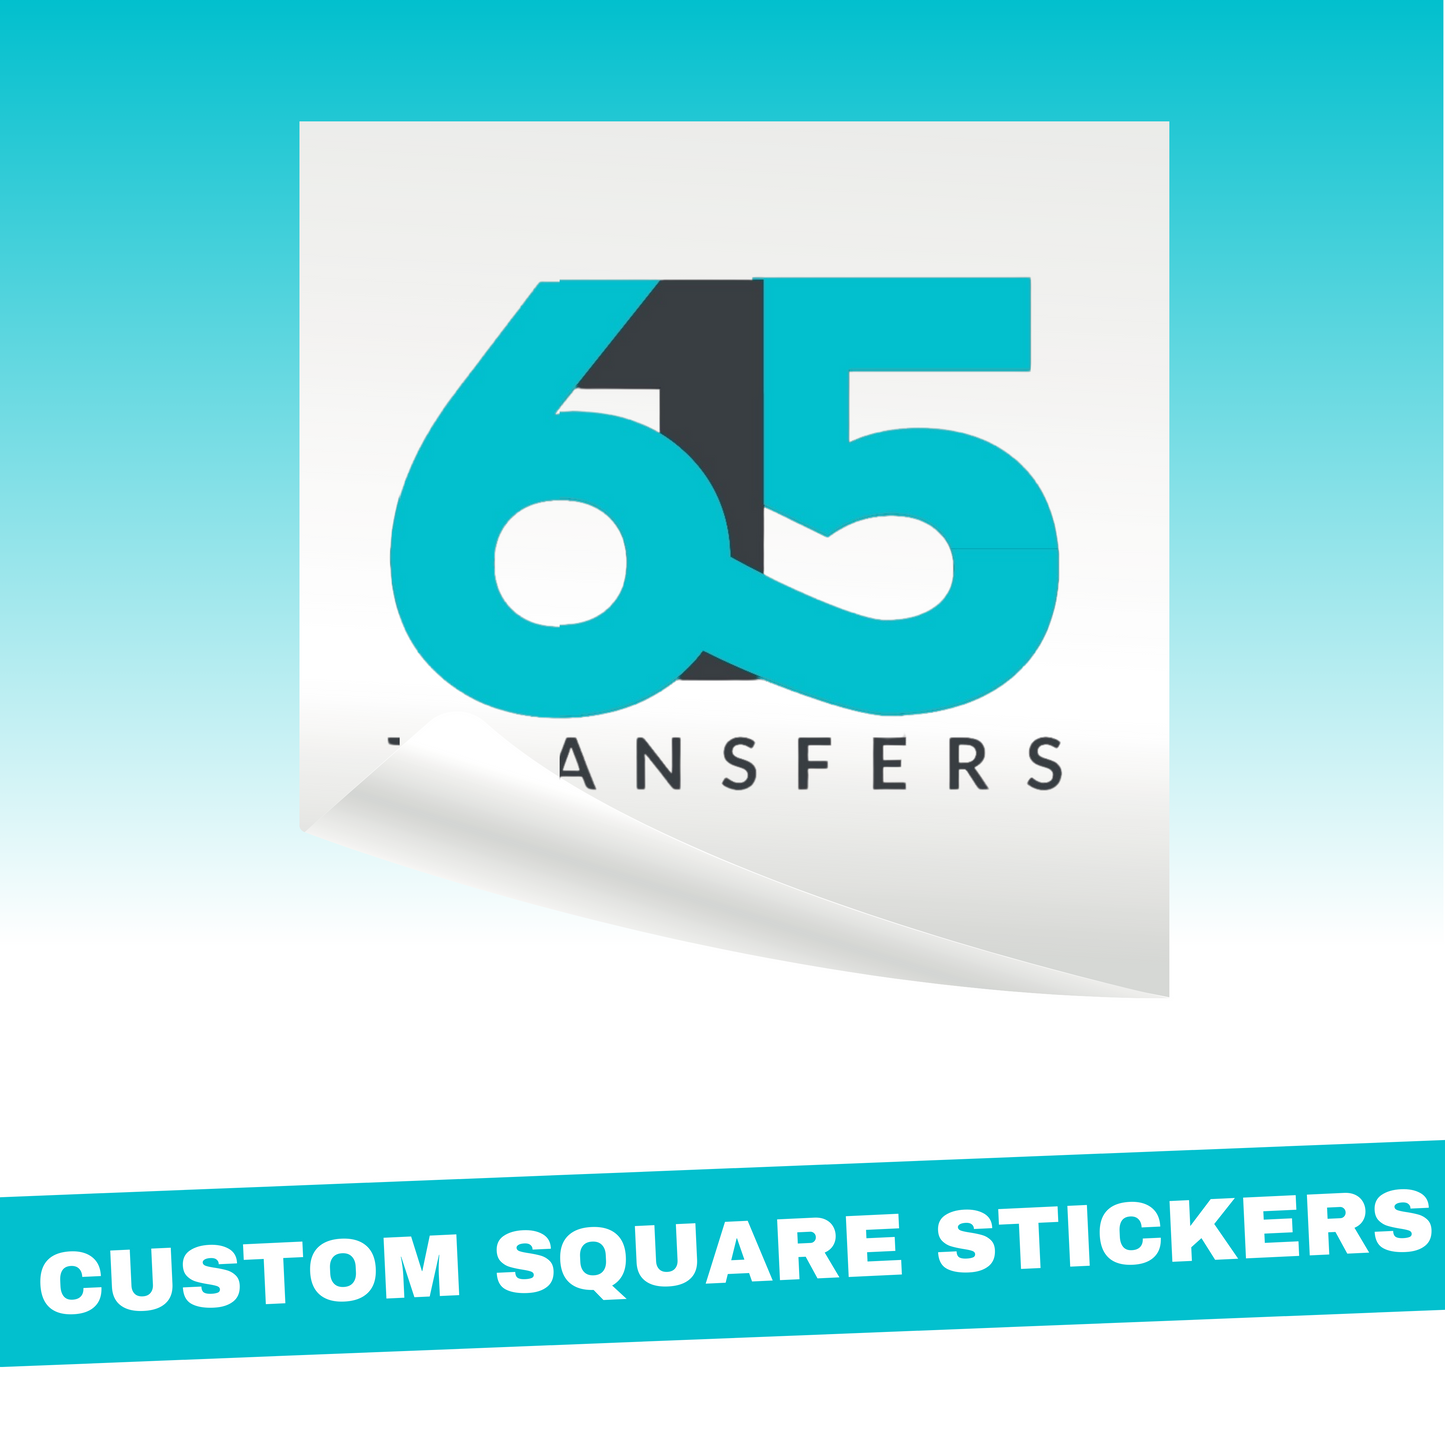 Custom Square Stickers